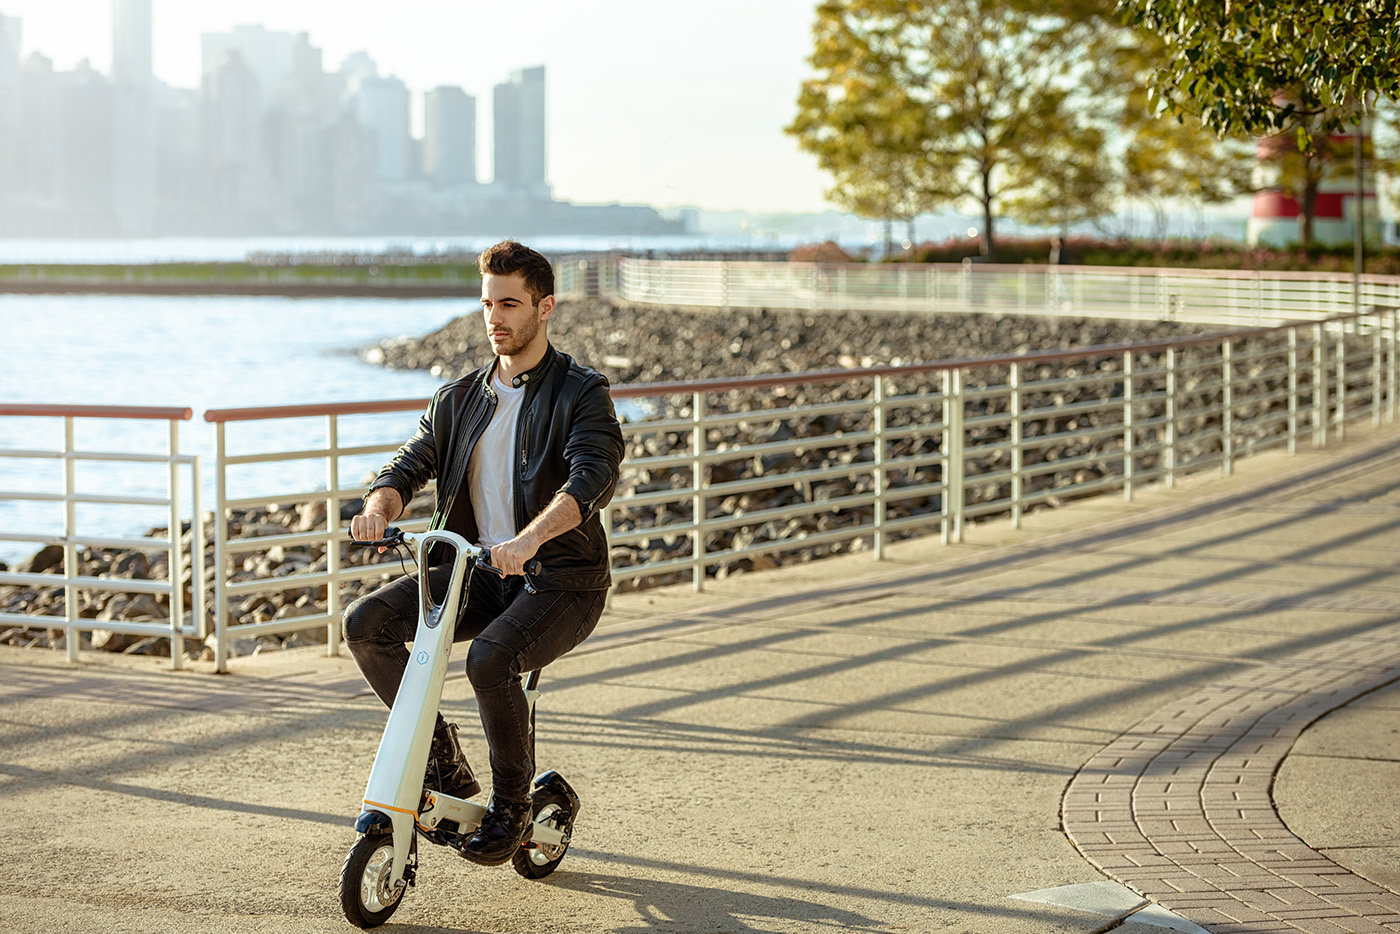 Smart Bike advertisement Technology future lifestyle ride Citylife small bycicle